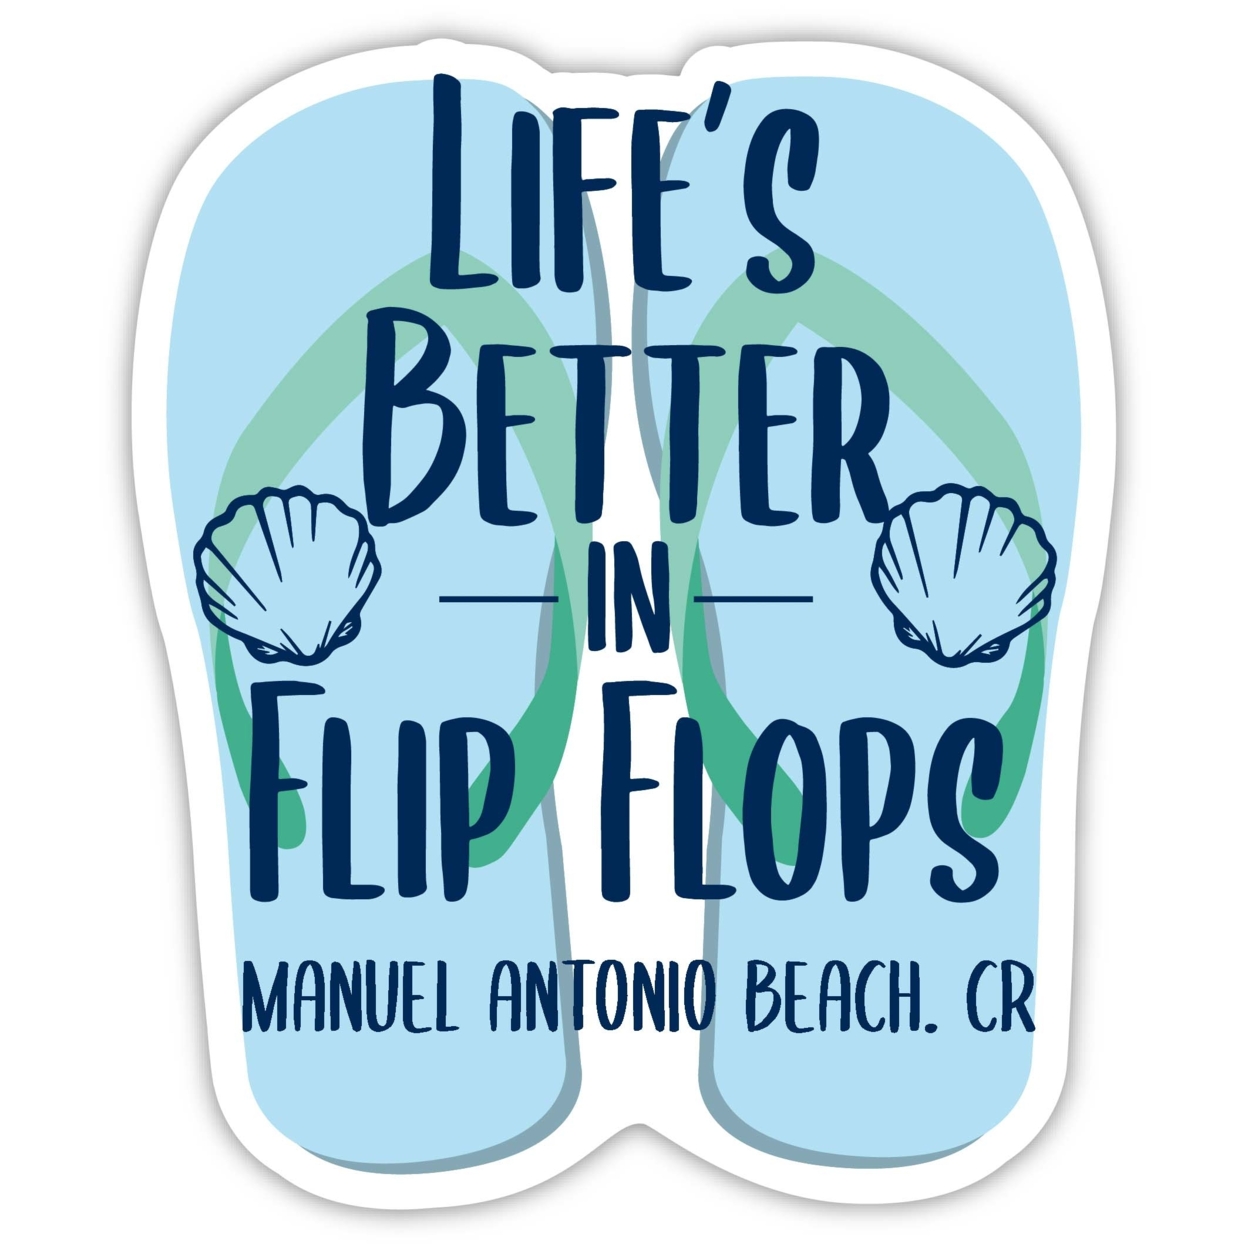 Manuel Antonio Beach Costa Rica Souvenir 4 Inch Vinyl Decal Sticker Flip Flop Design